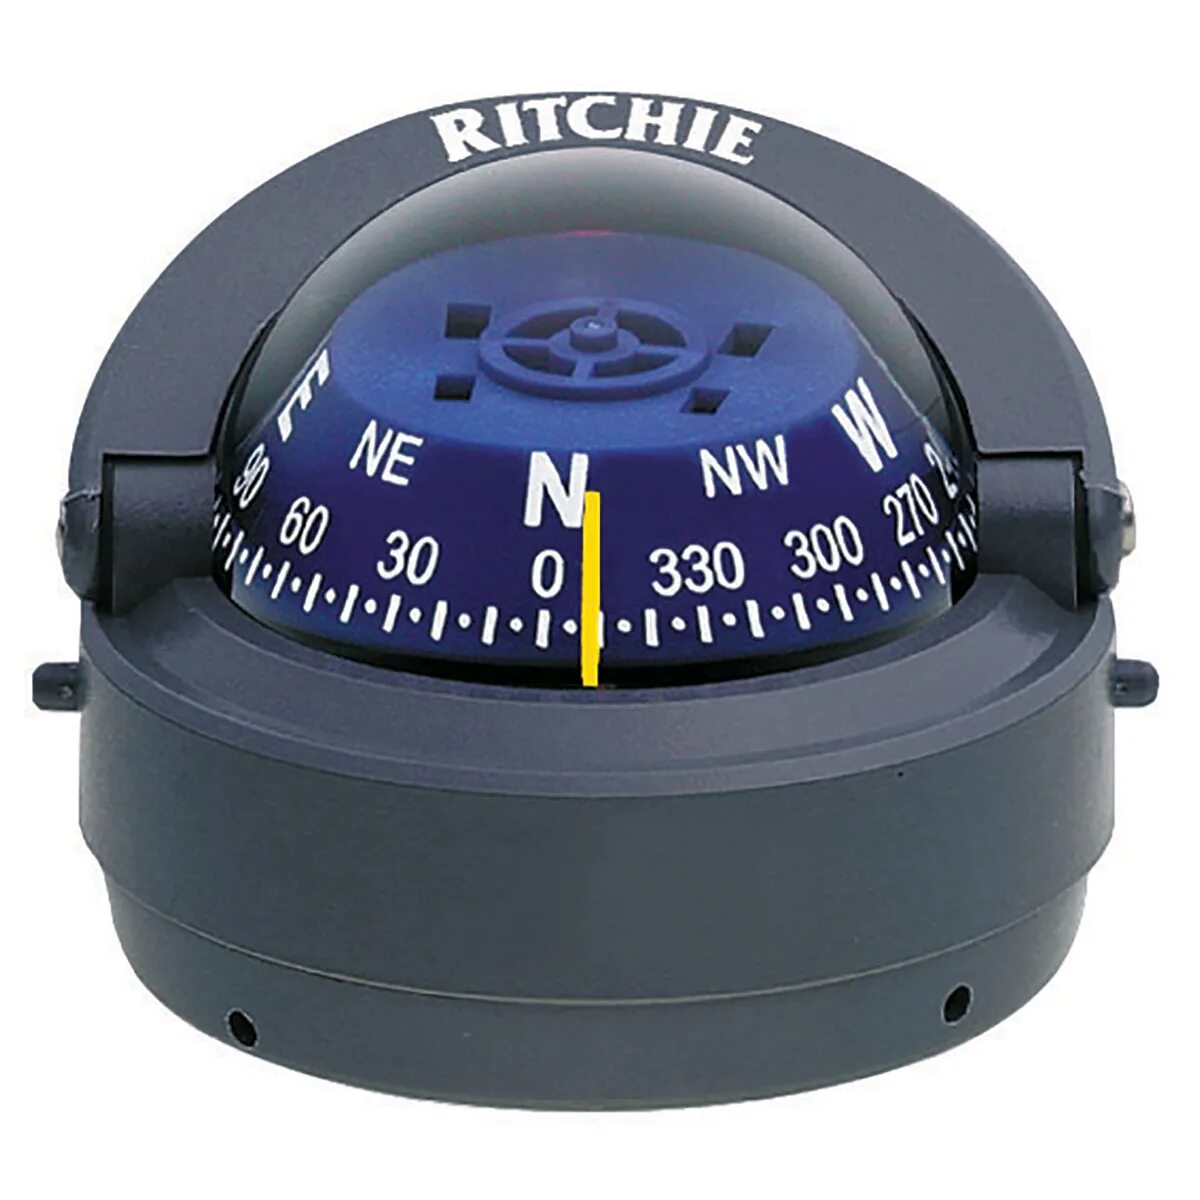 Компас Ritchie navigation Angler ra-93. Компас Ritchie navigation Voyager b-80. Компас: g34 st13. Яхтенный компас Ritchie.